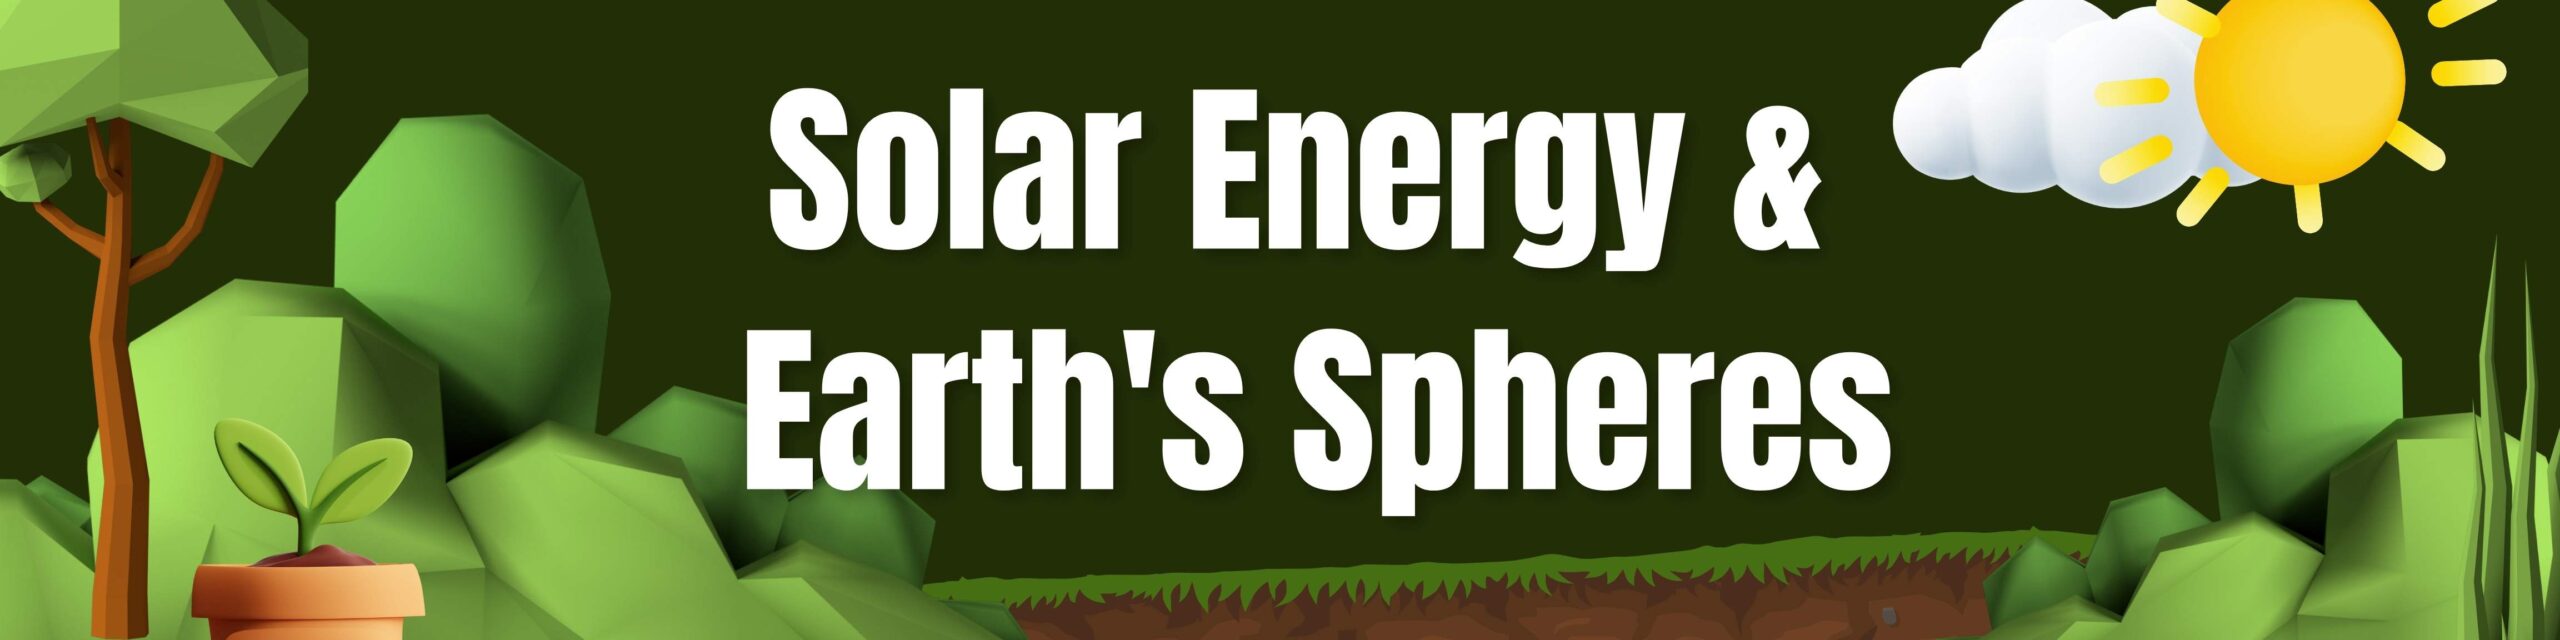 Solar Energy & Earth's Spheres